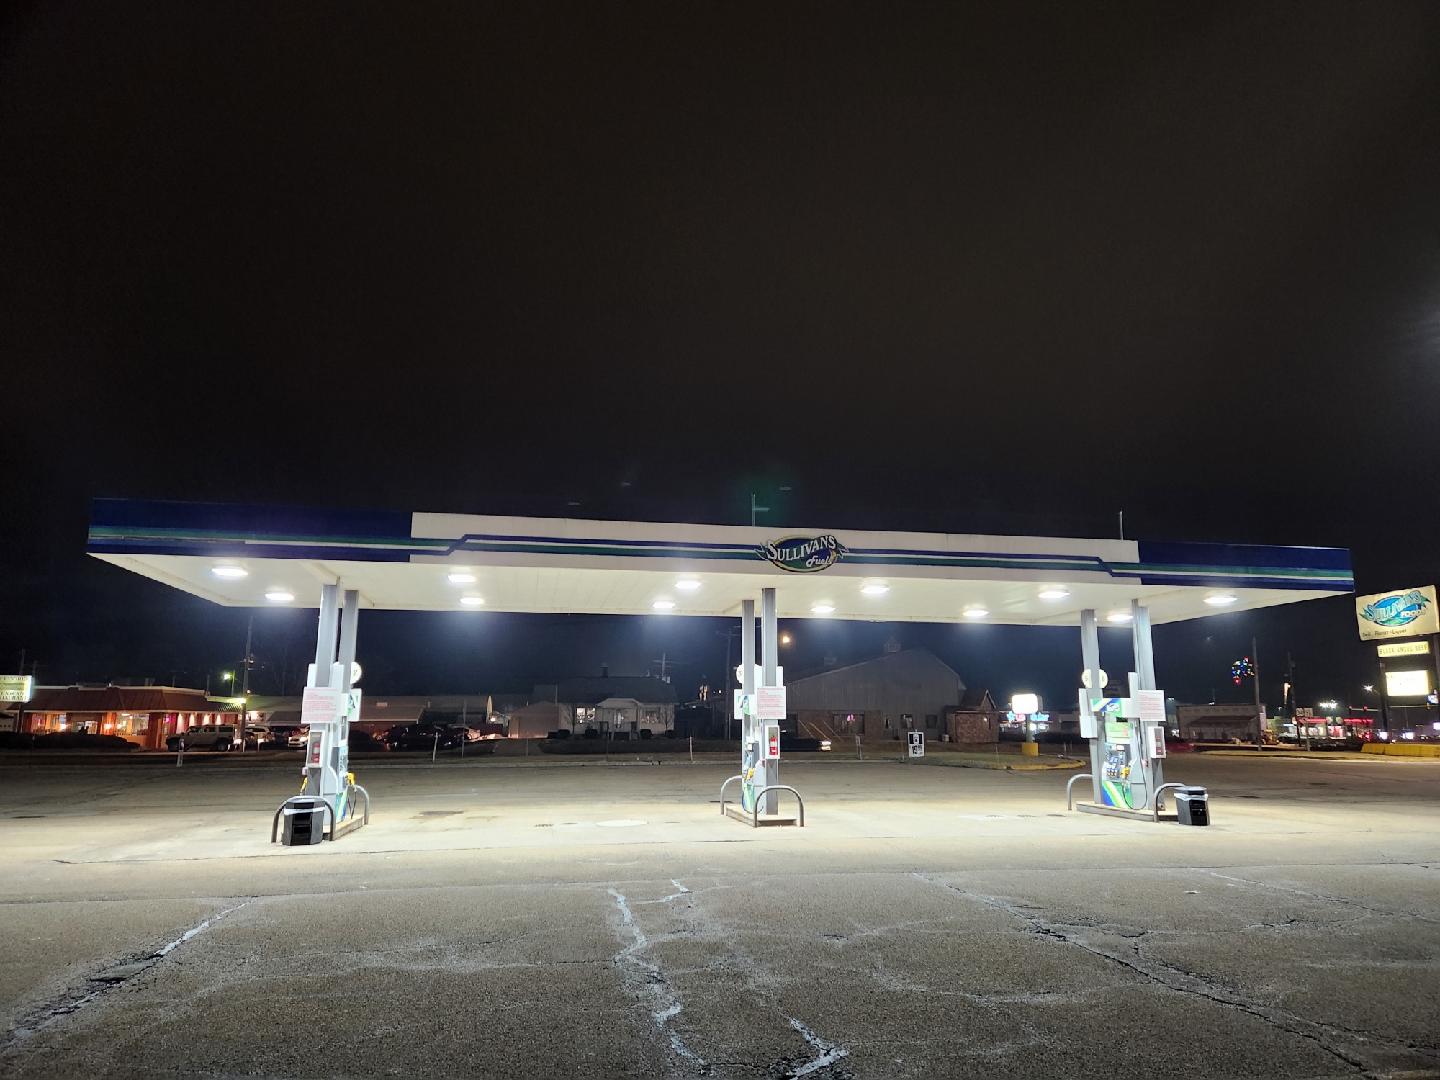 Sullivans - Kewanee, IL, US, nearest gas station with car wash